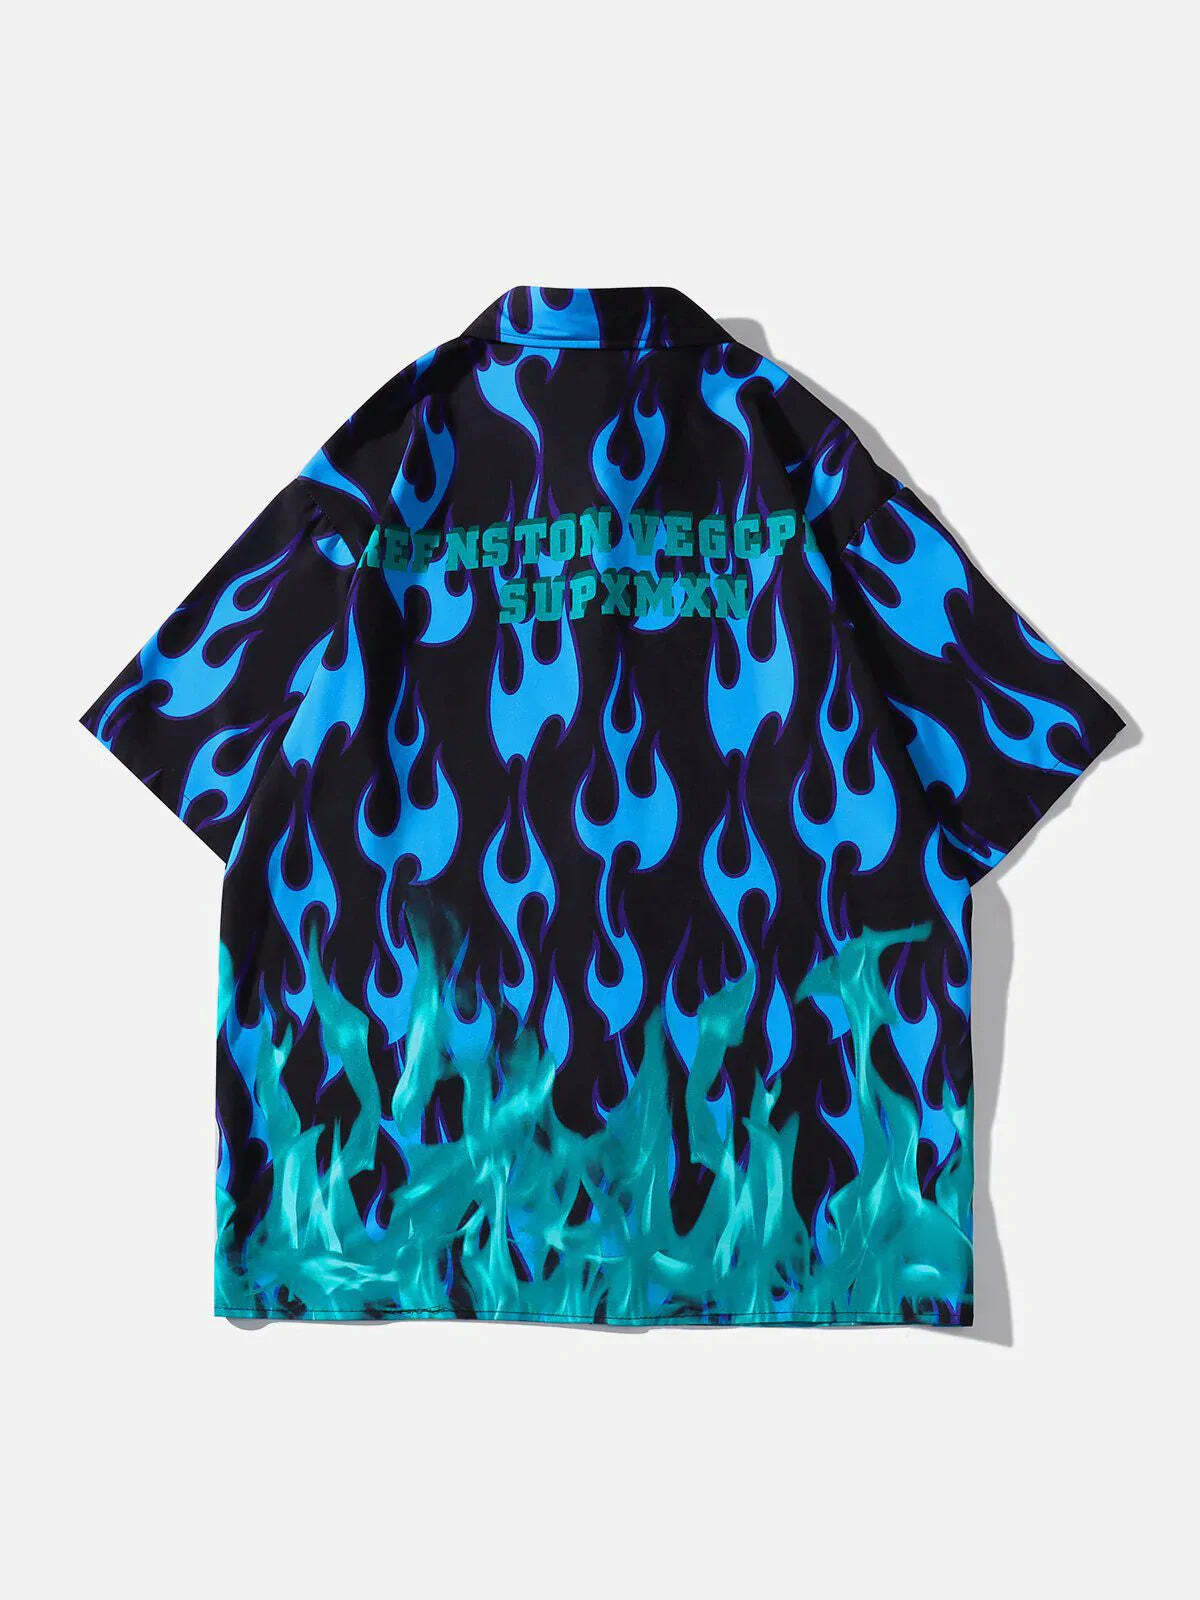 dynamic flame print shirt edgy  retro streetwear staple 8657